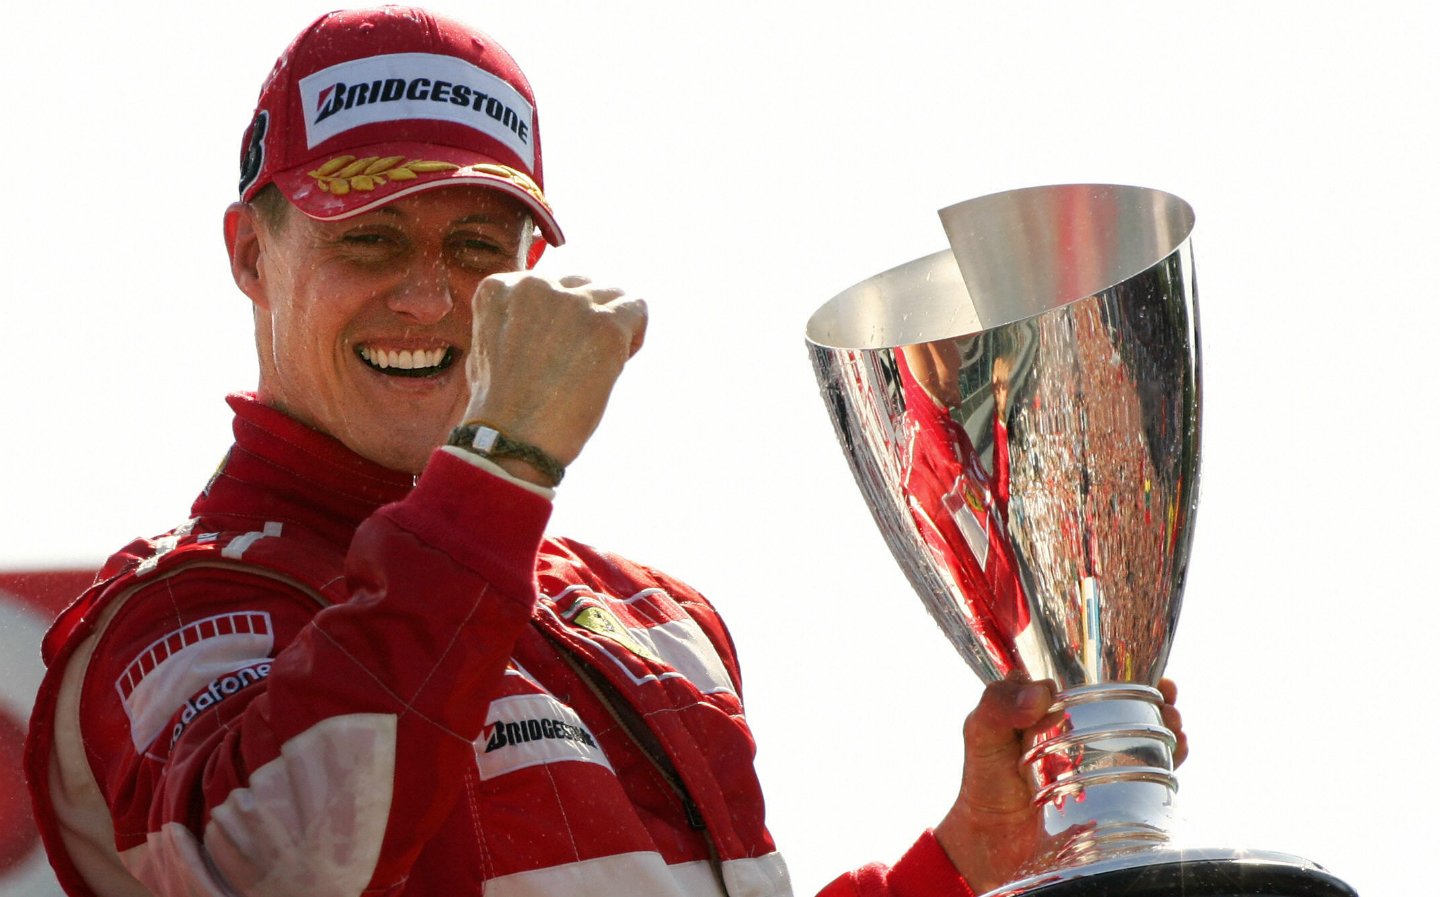 Tribute to Michael Schumacher